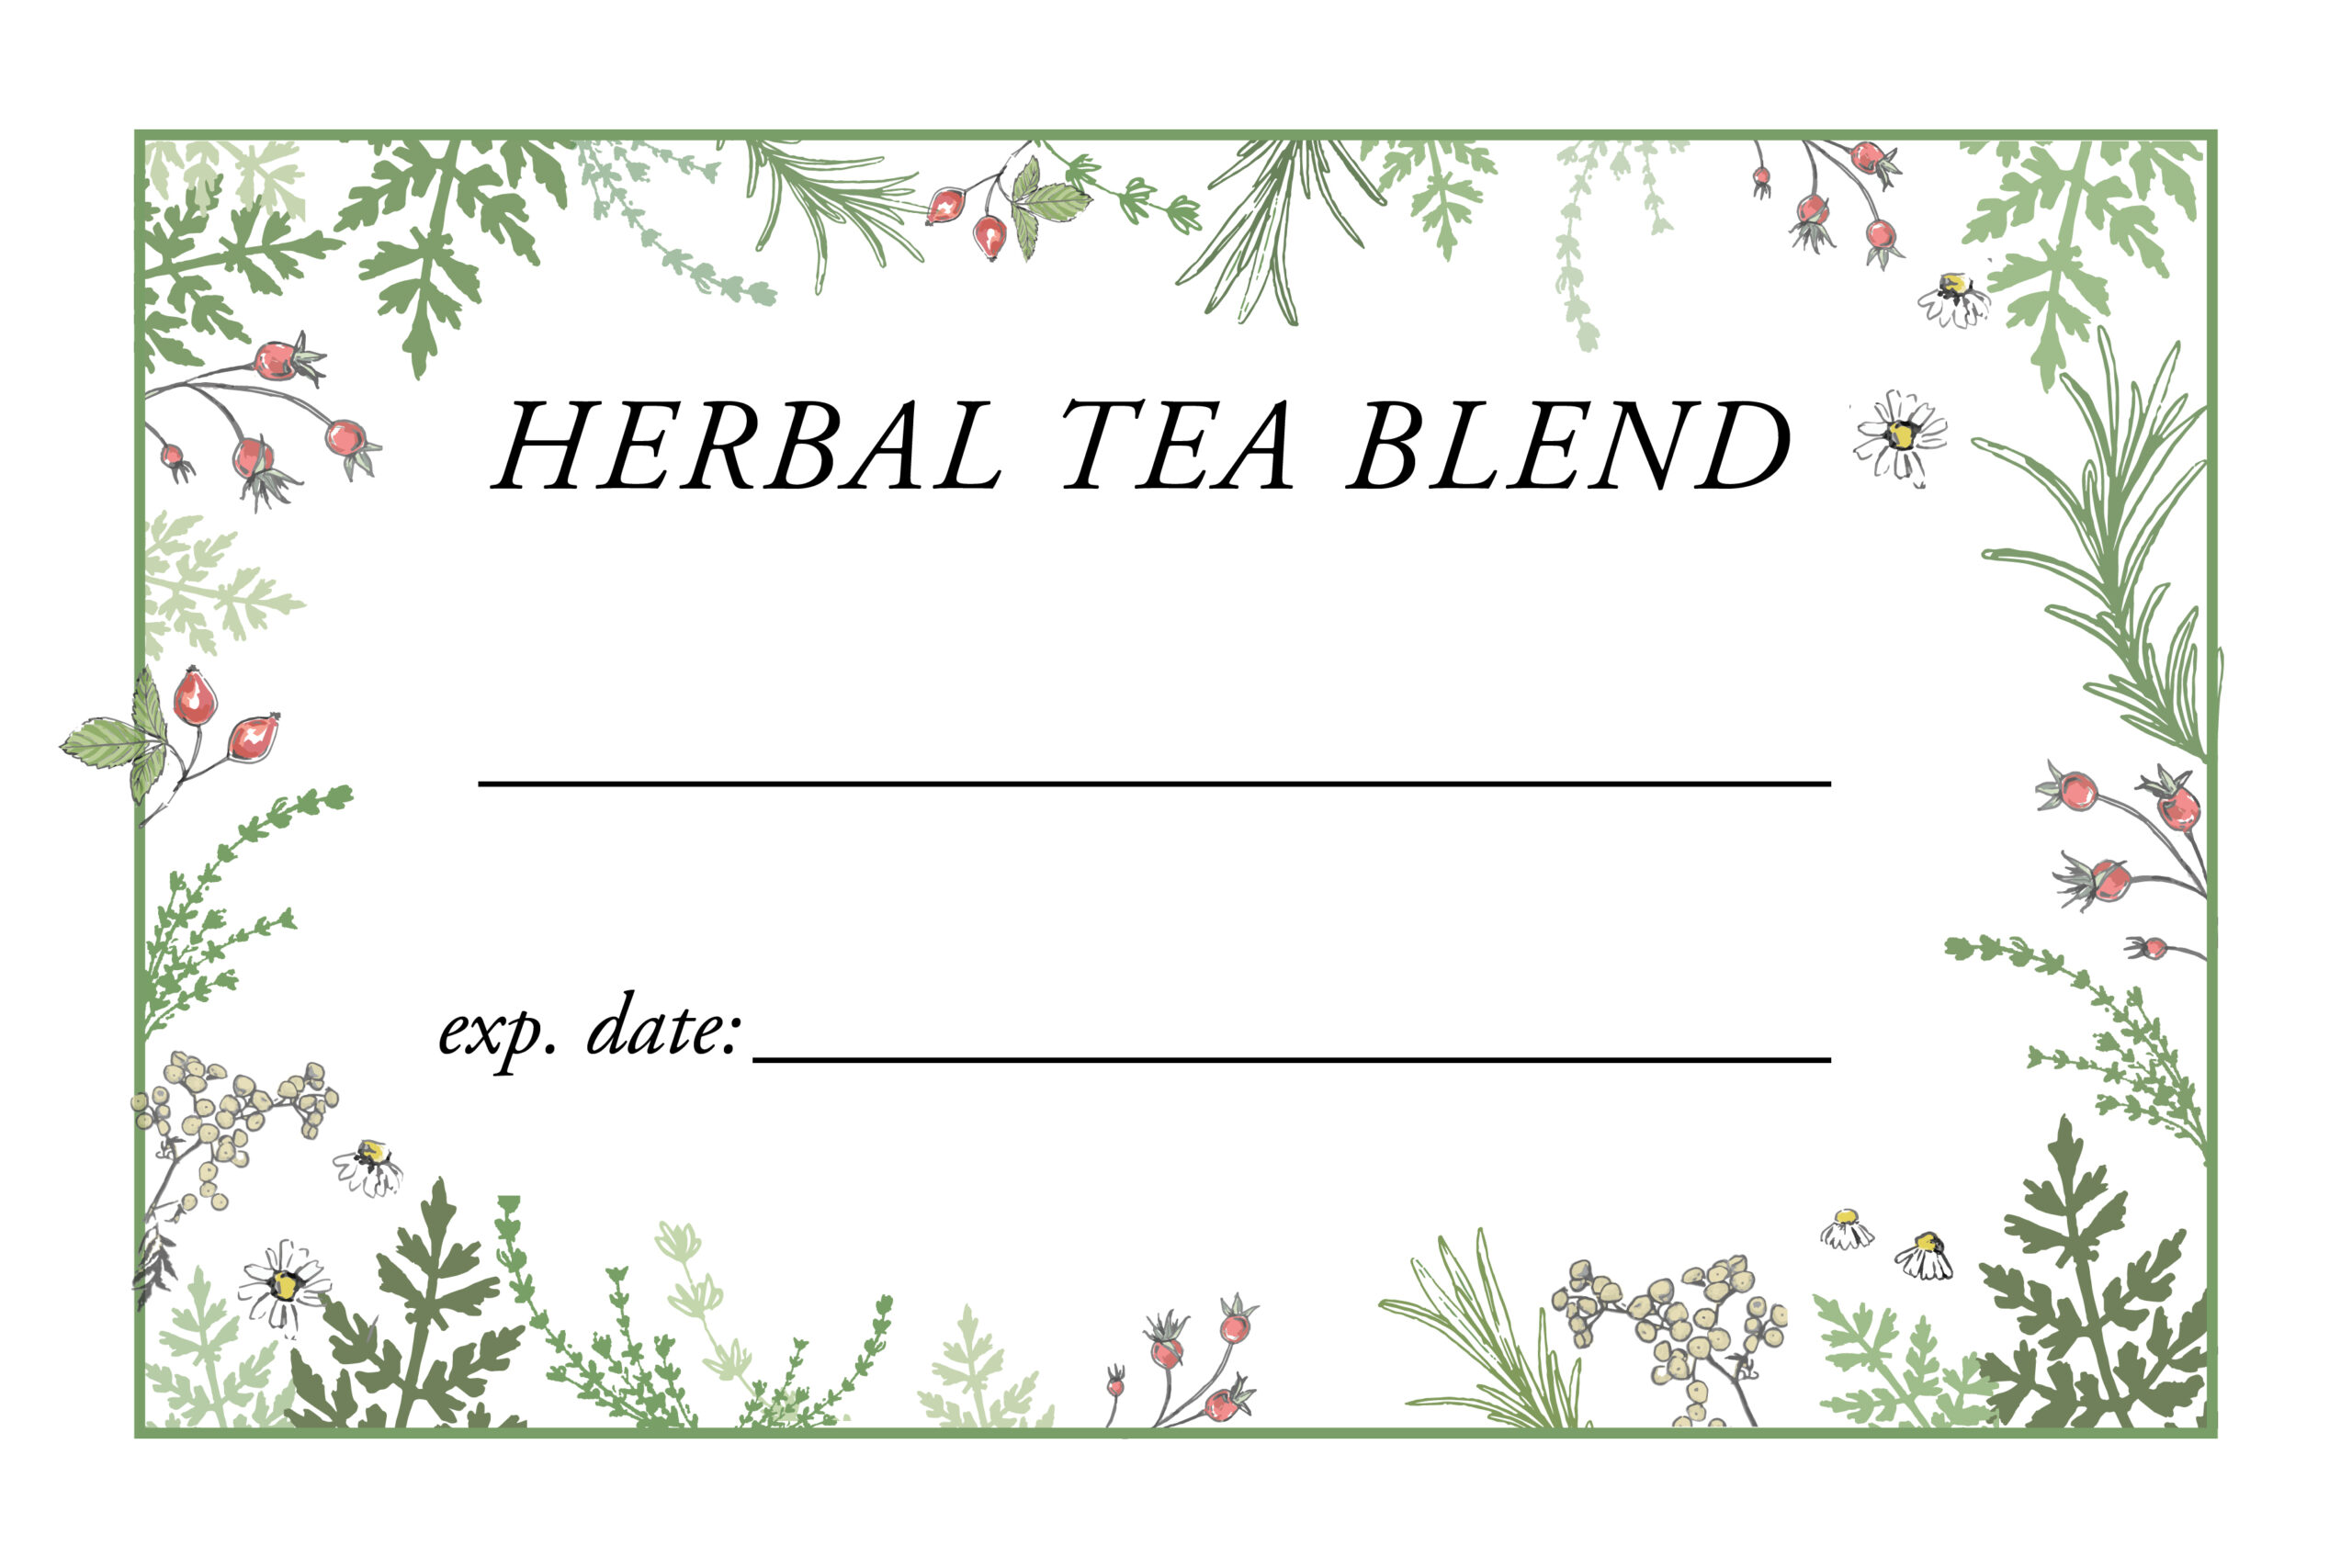 Herbal Tea Blend Label Greens4